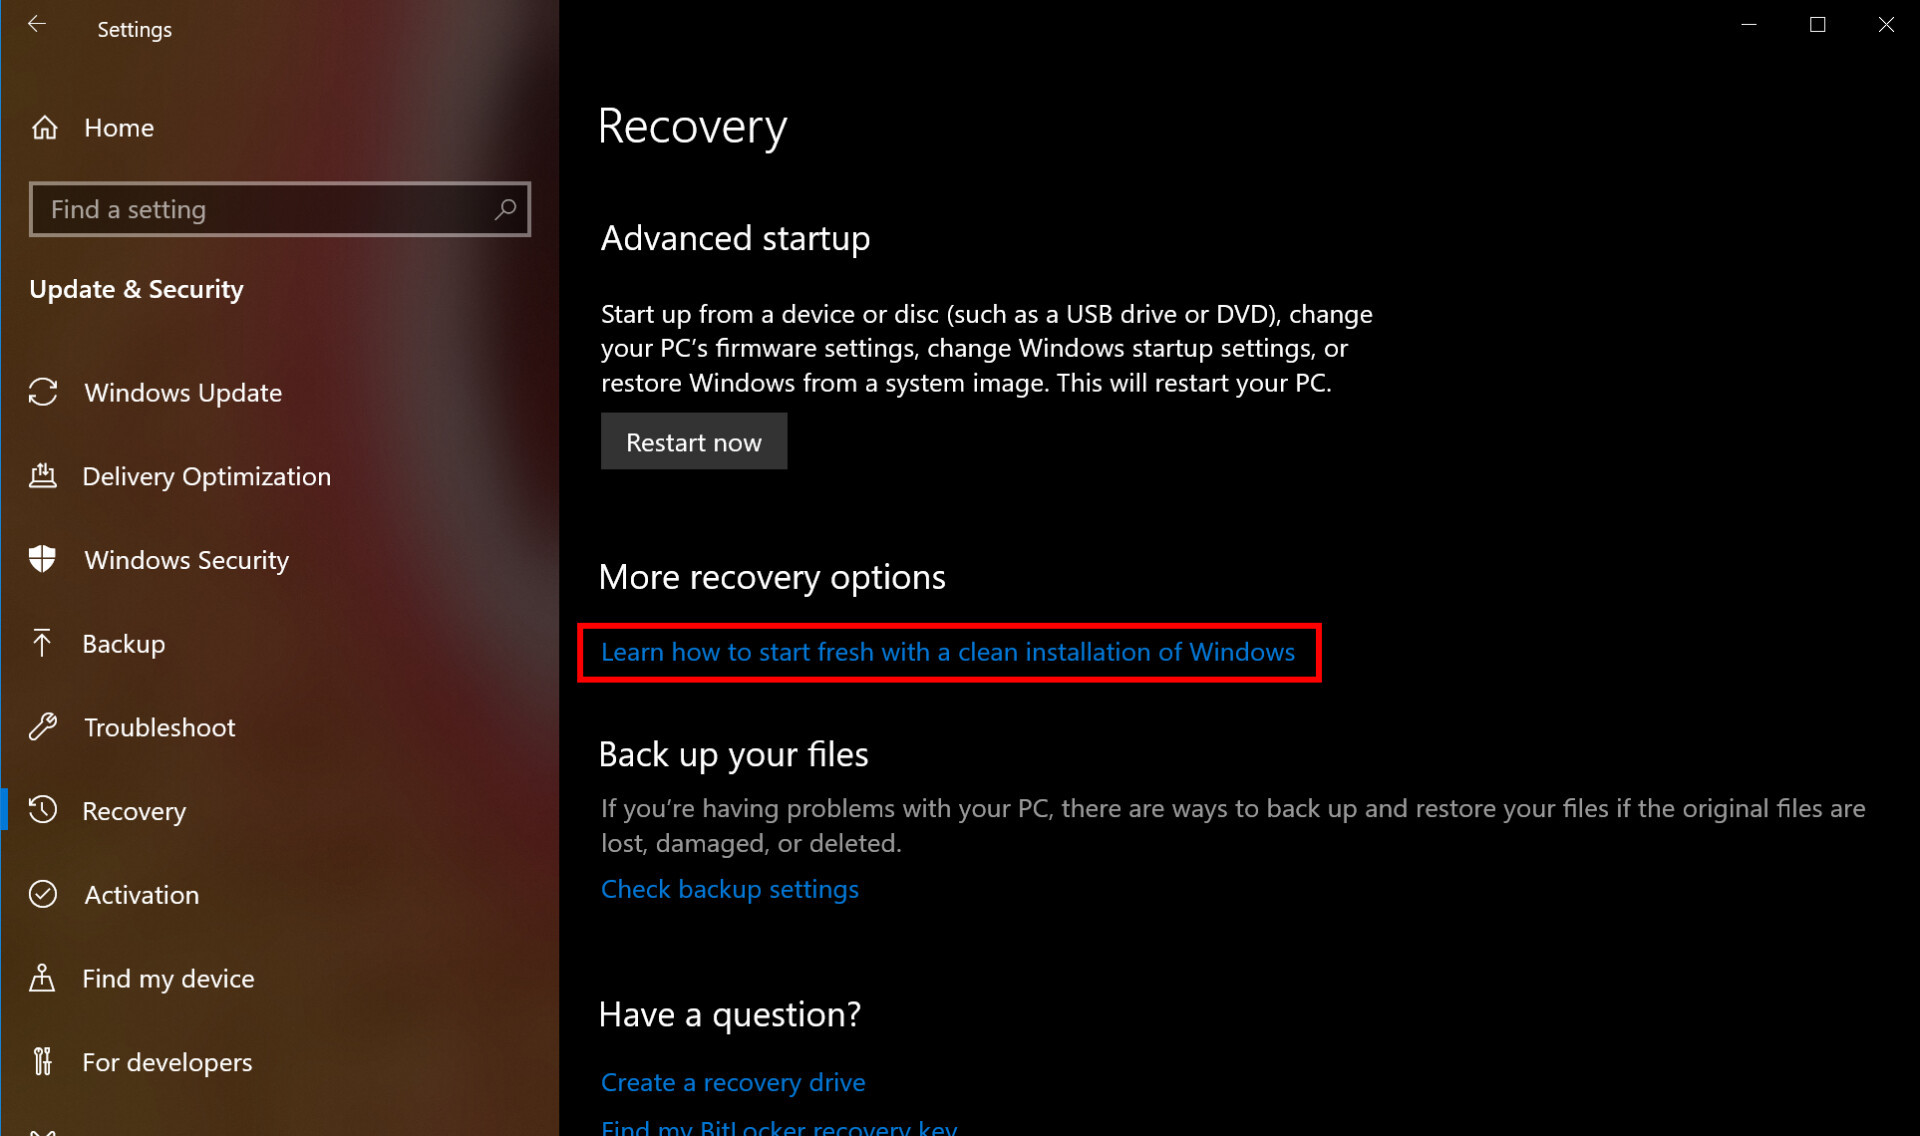 Windows 10 recovery setting menu